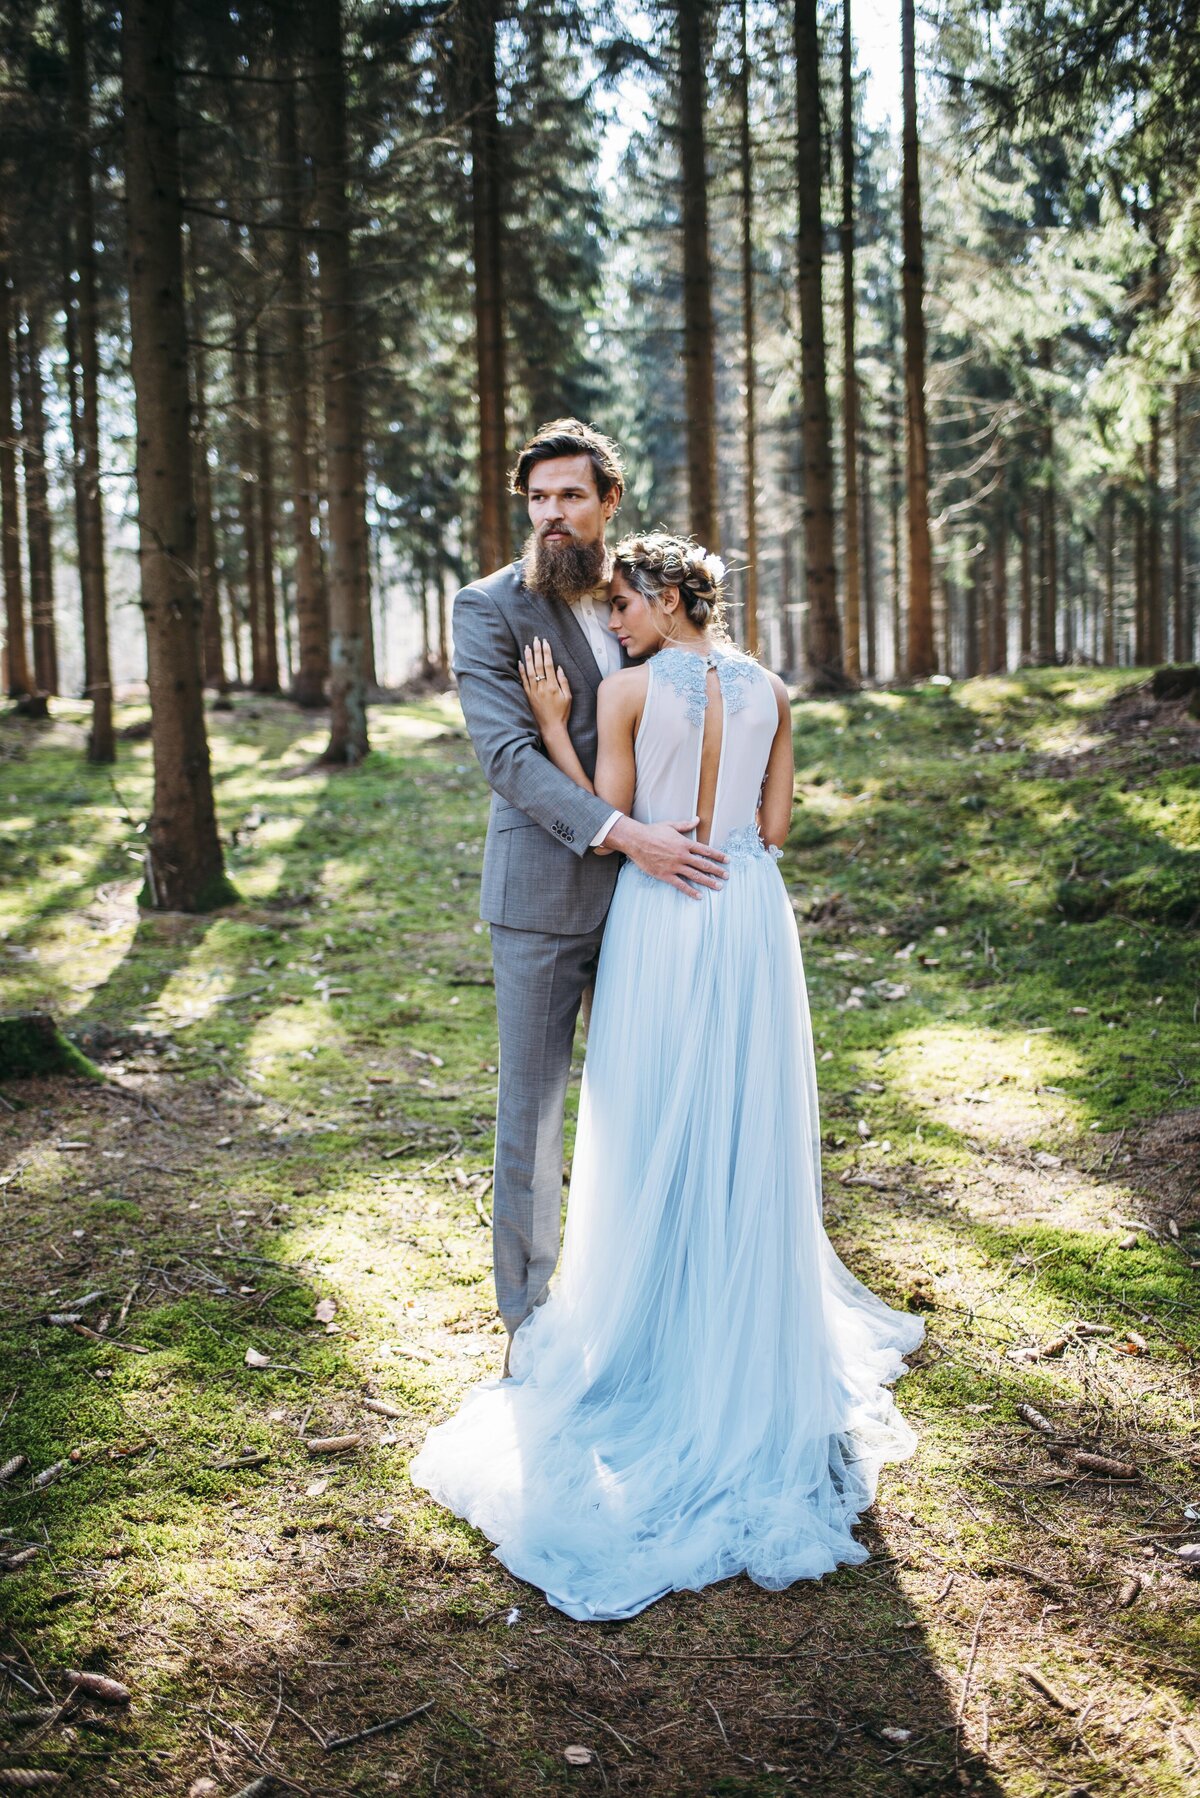 Styled Wedding Shoot- Marlon van Efferink Fotografie - 20